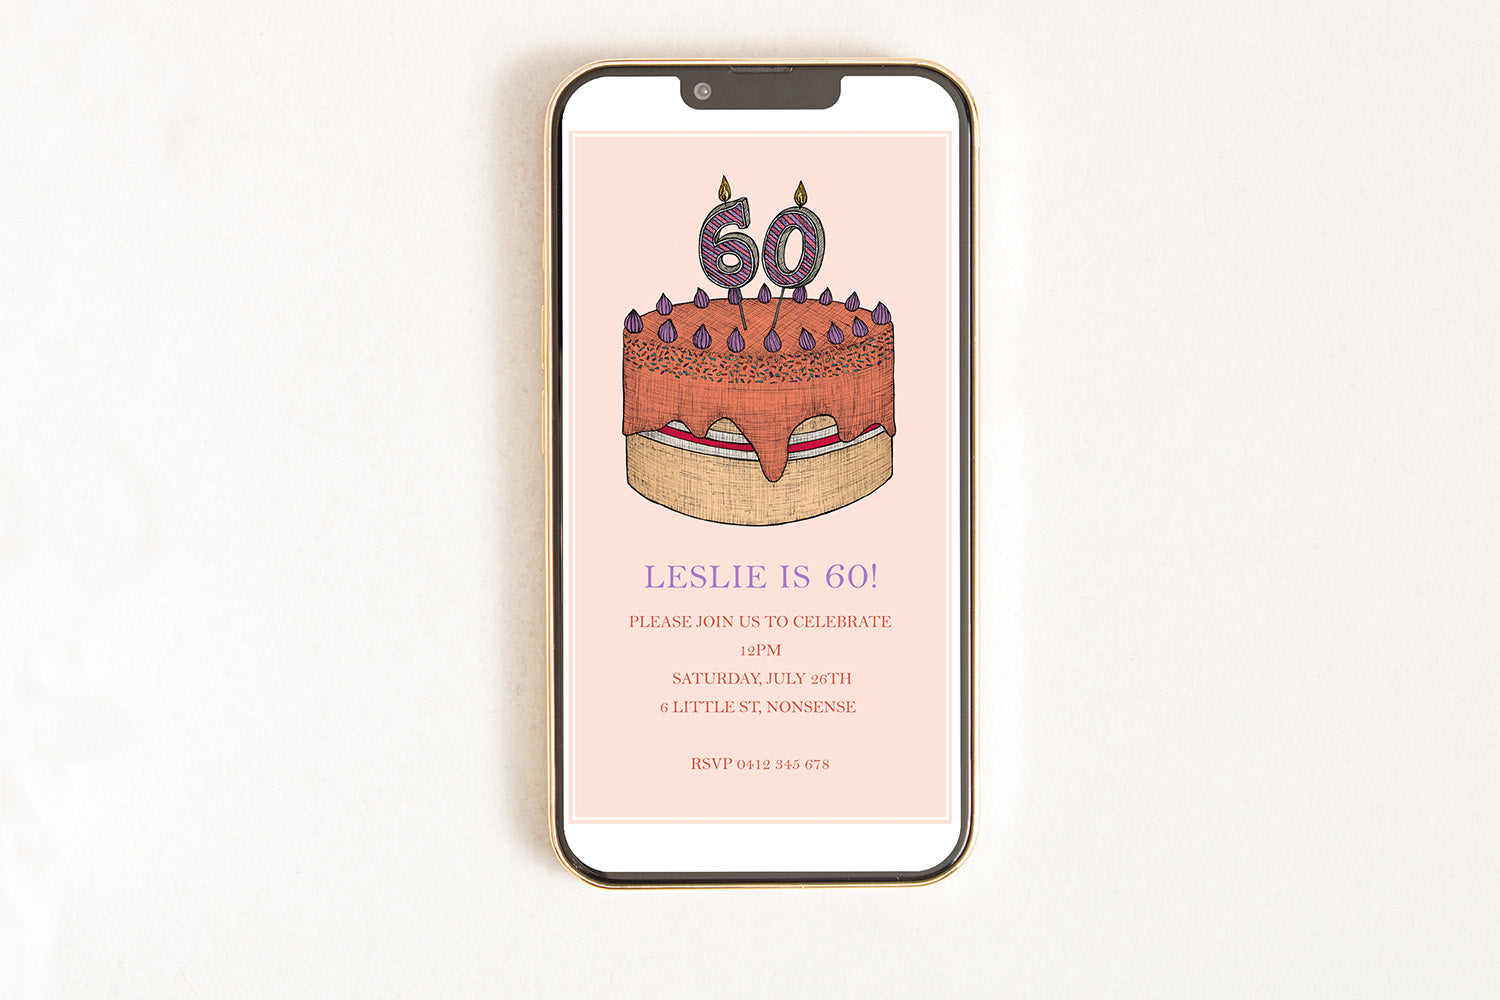 60th Birthday Cake - Digital Invitation